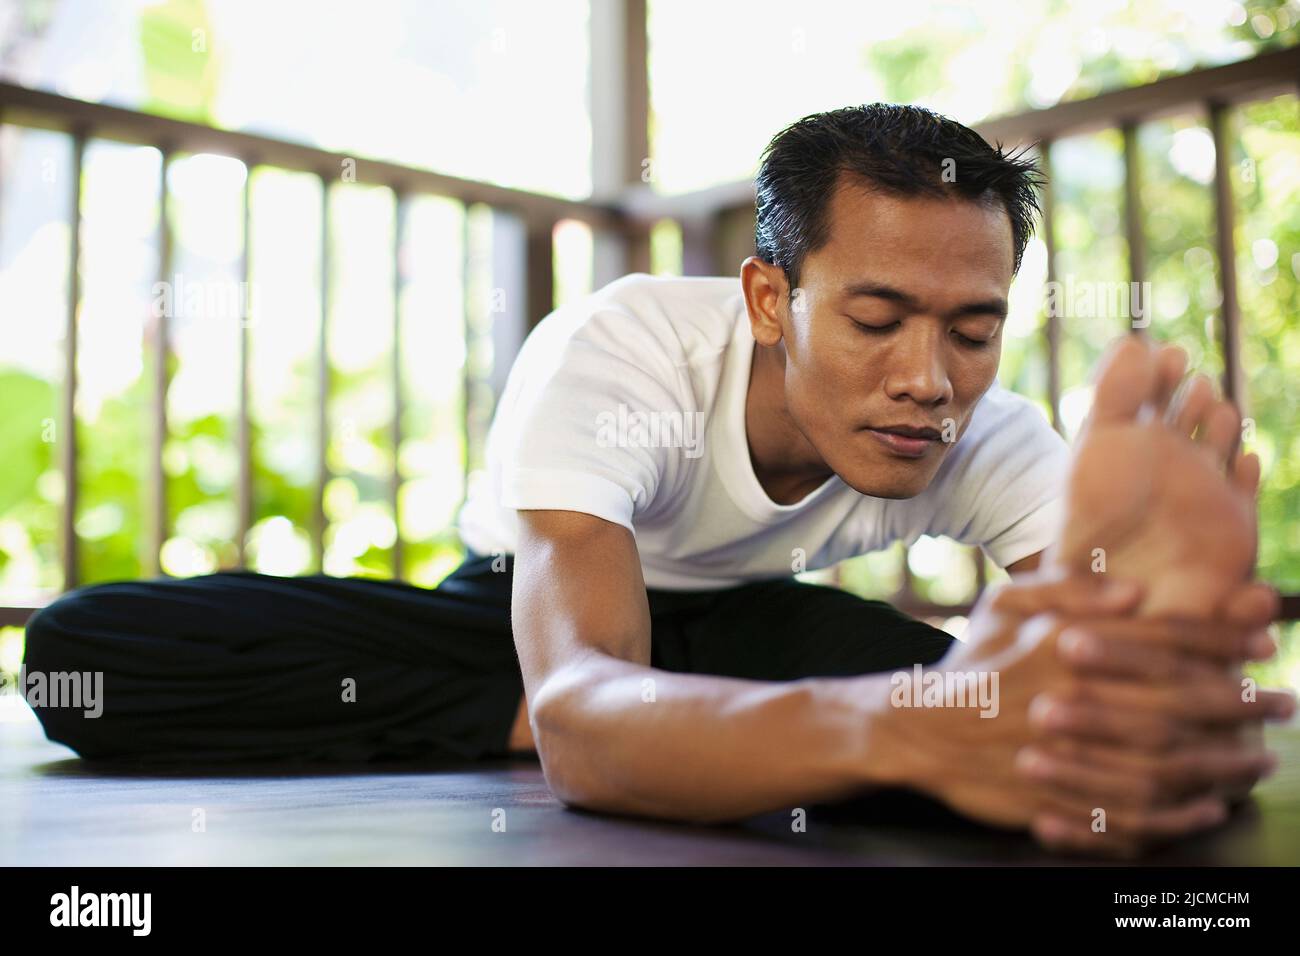 Junger Balinese praktiziert Yoga im Open-Air-Yoga-Pavillon in den Ubud Hanging Gardens, Bali, Indonesien. Stockfoto